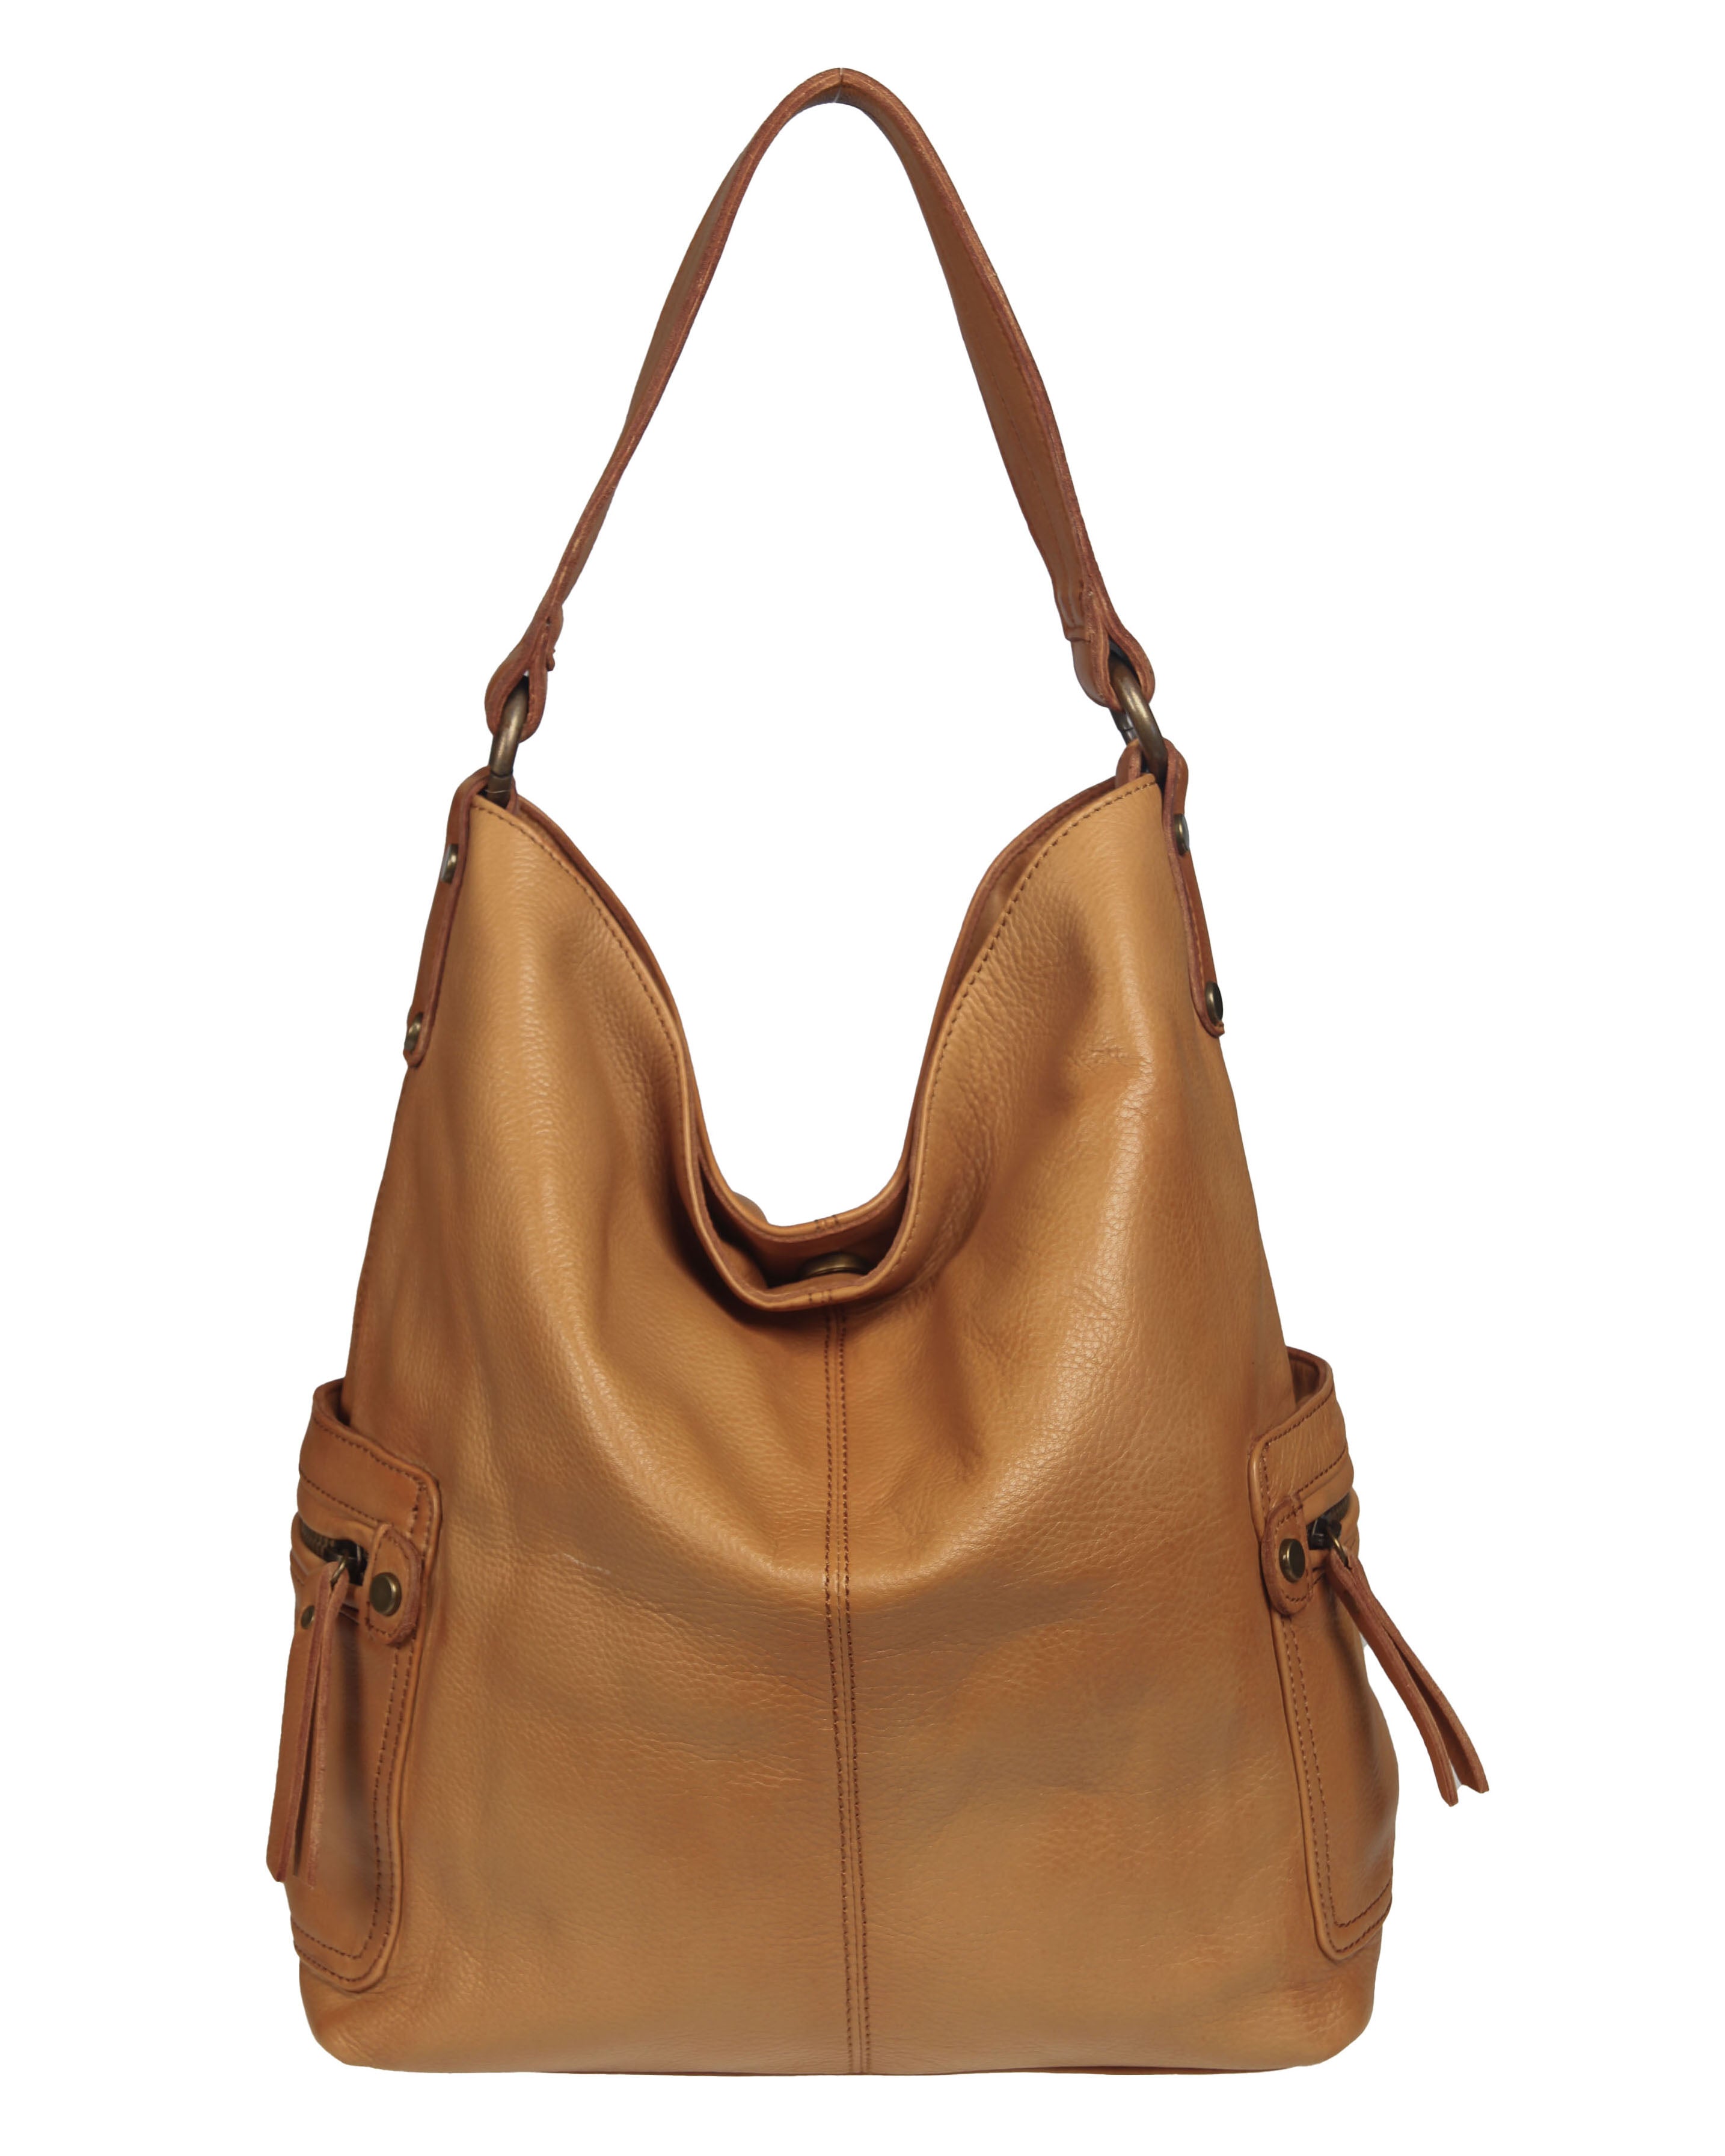 Tano Leather Hobo Handbag - Women's handbags